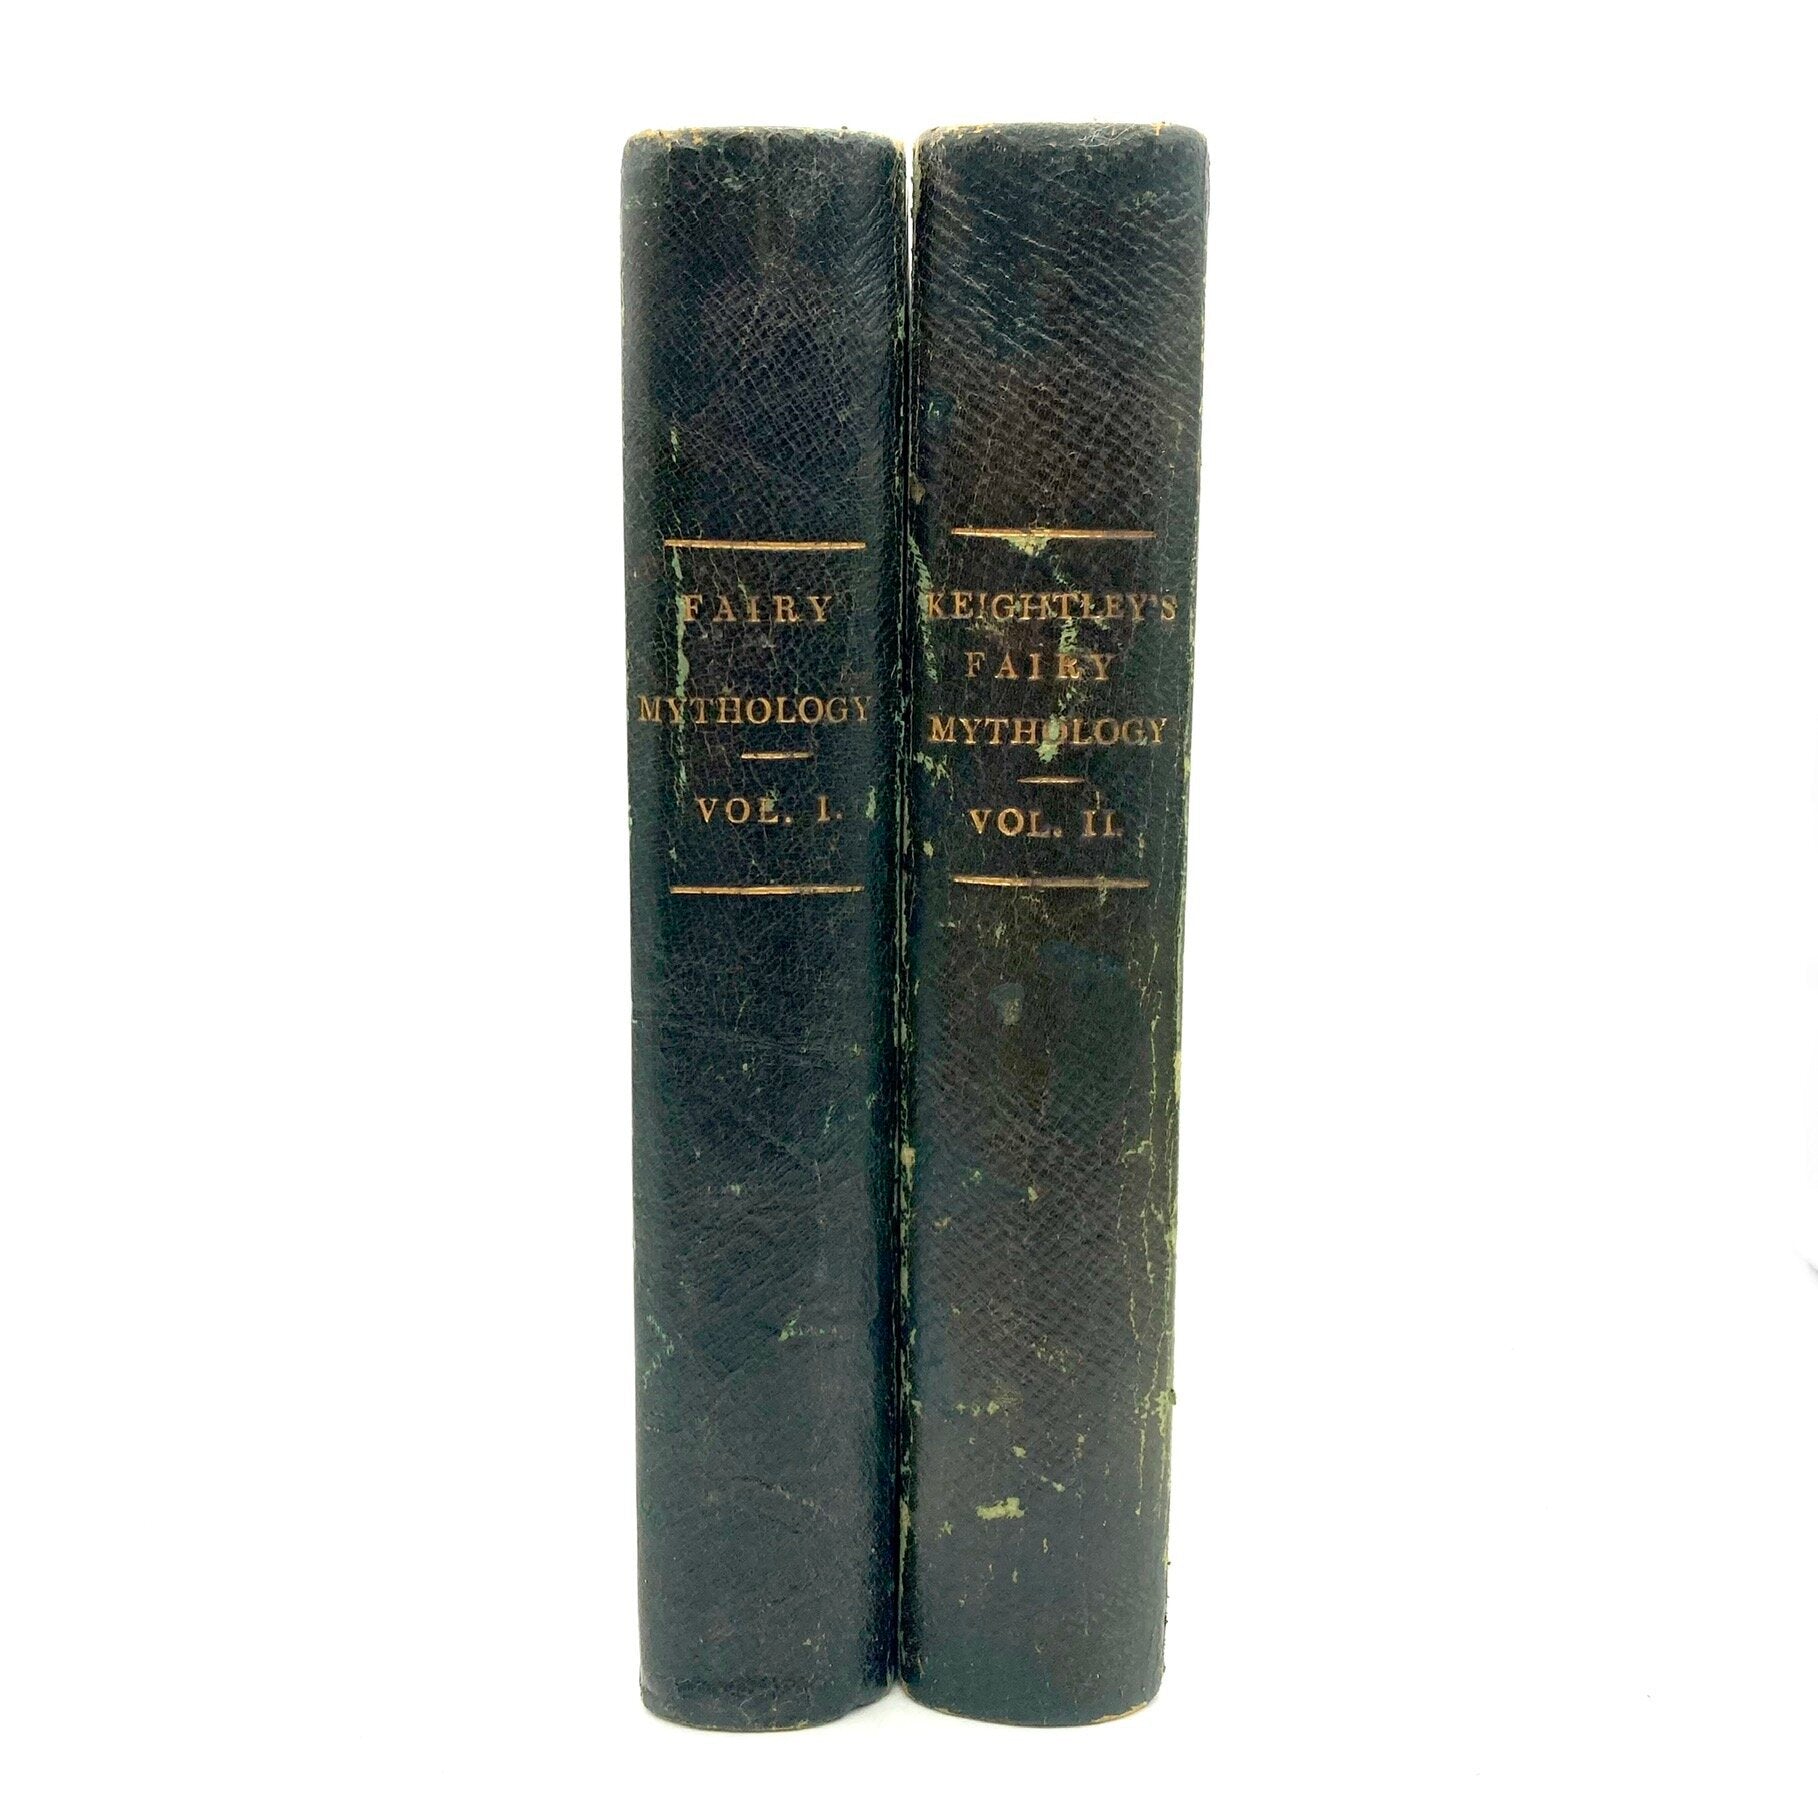 KEIGHTLEY, Thomas "The Fairy Mythology" [Whittaker, Treacher & Co, 1833] - Poe Provenance - Buzz Bookstore